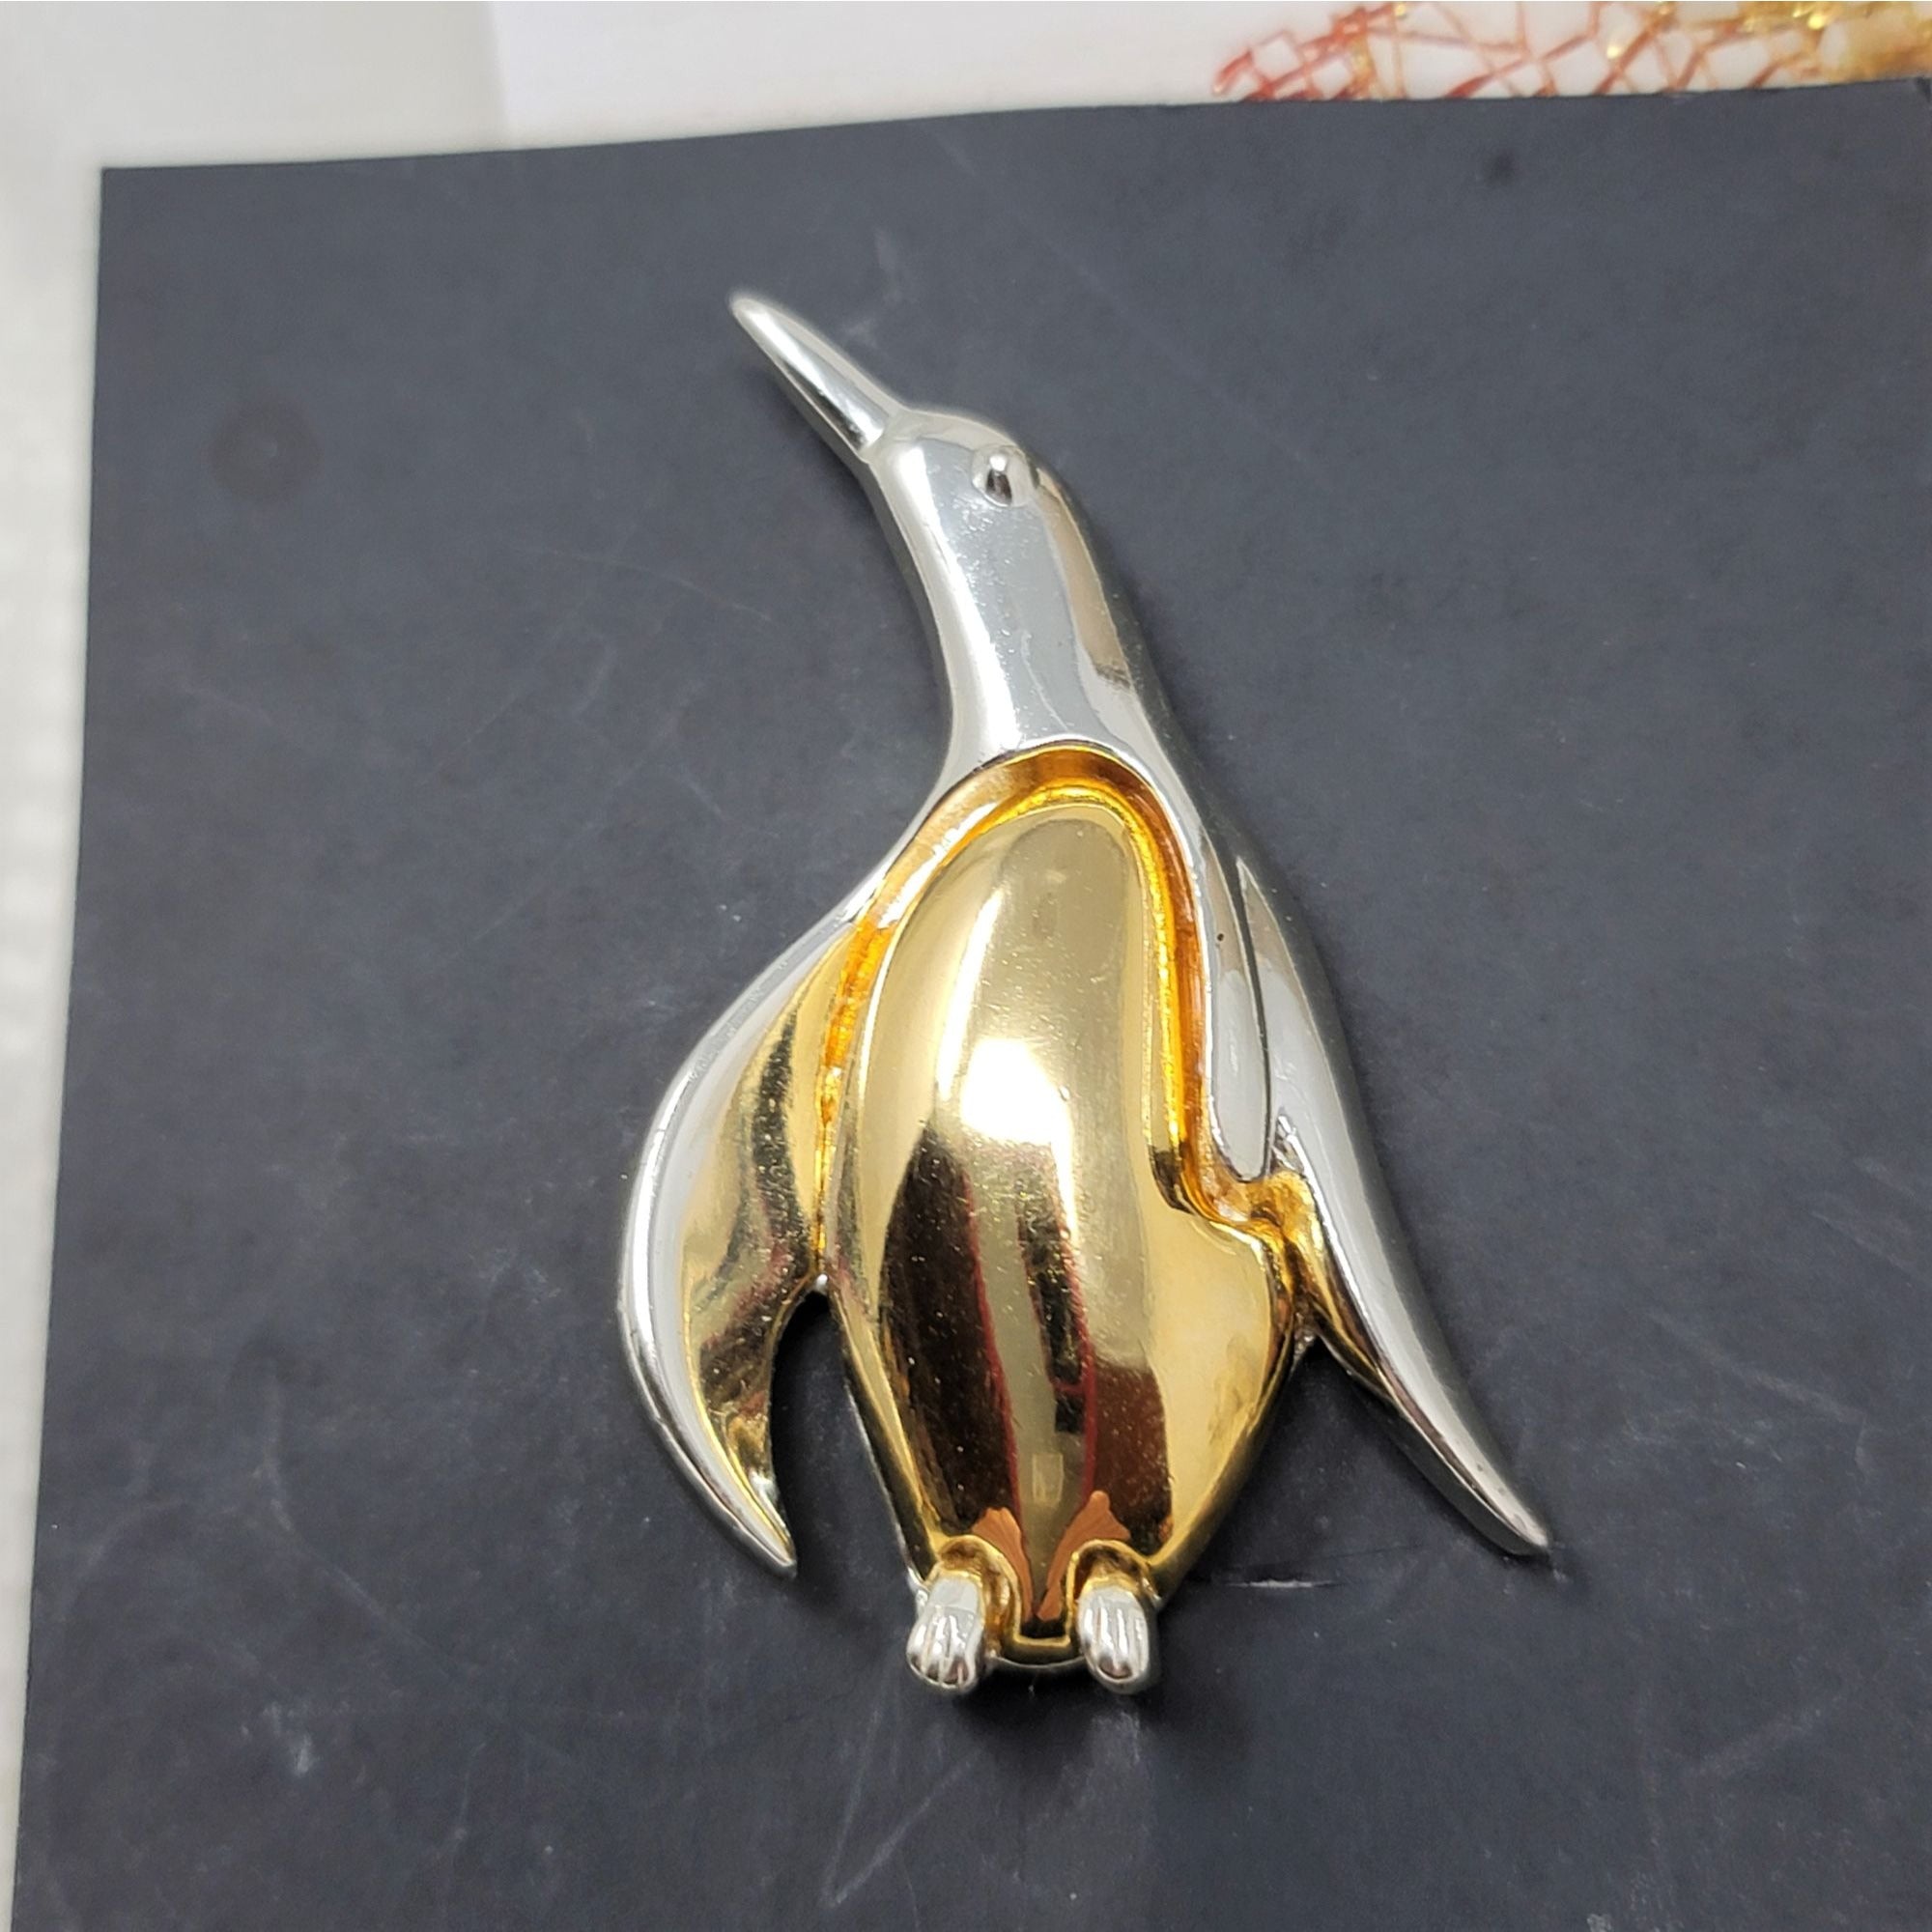 Penquin Pin Brooch in Gold & Silver